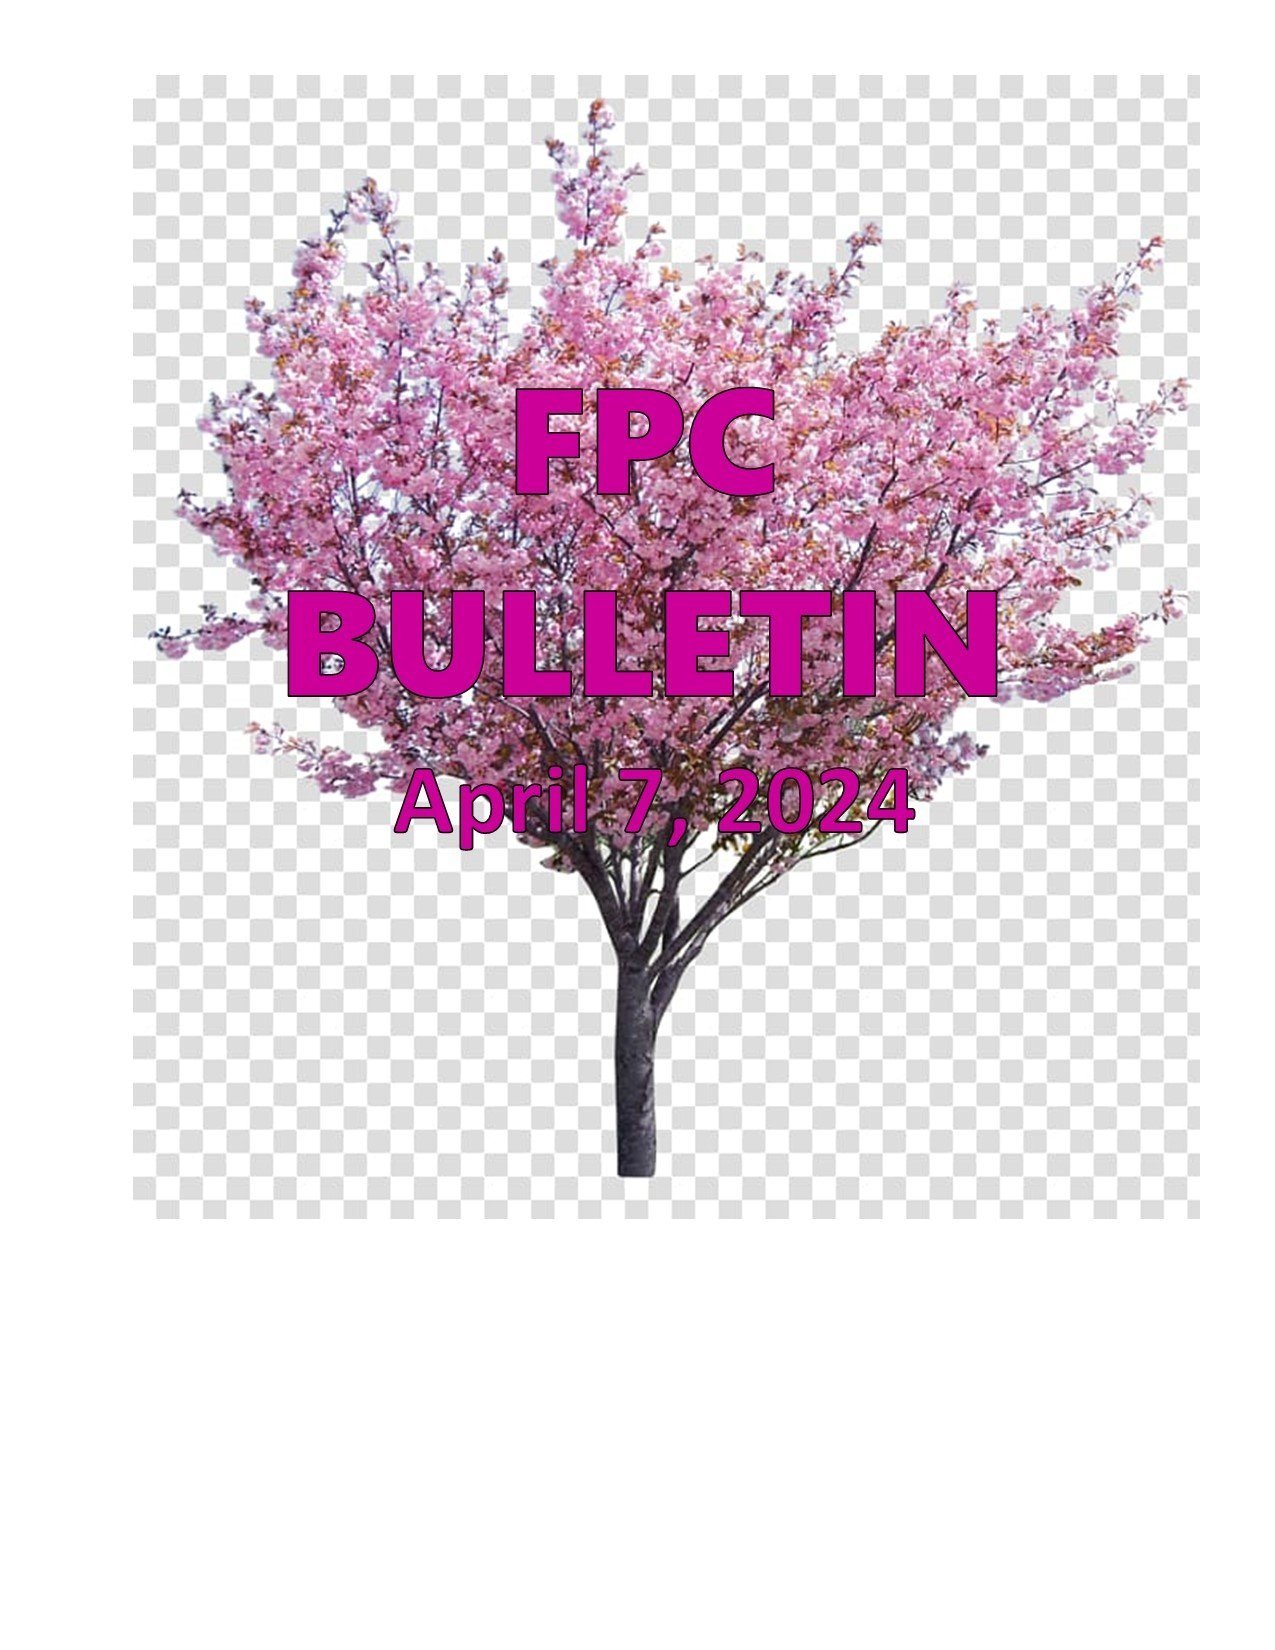 a+Button+-+Bulletin+April+7+2024.jpg